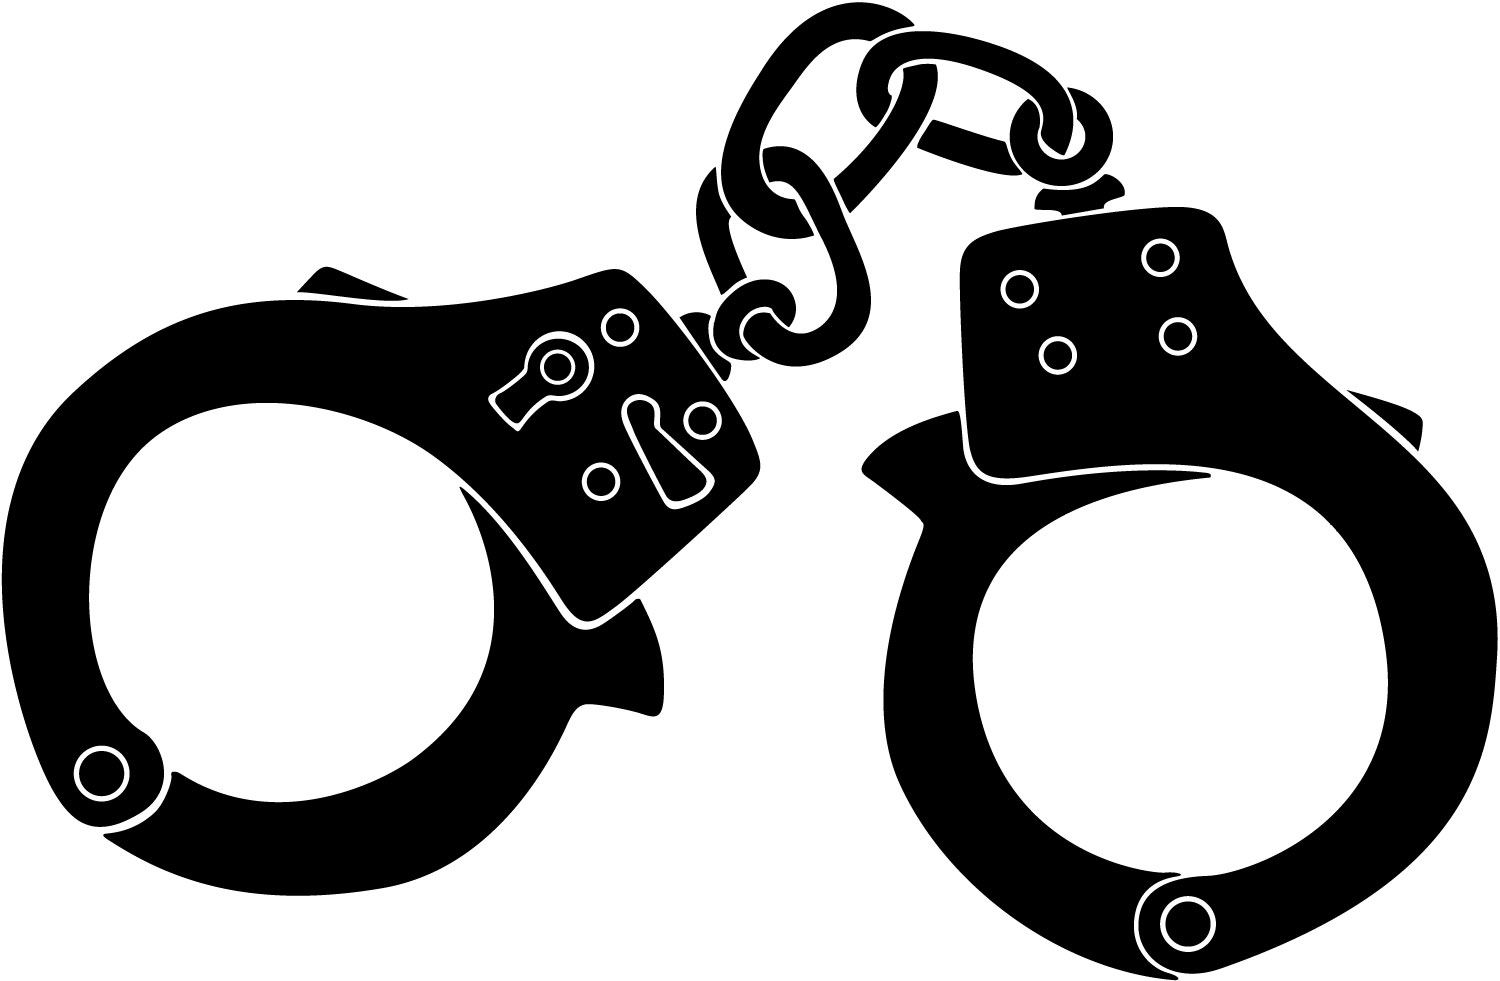 Handcuffs Doodle stock vector